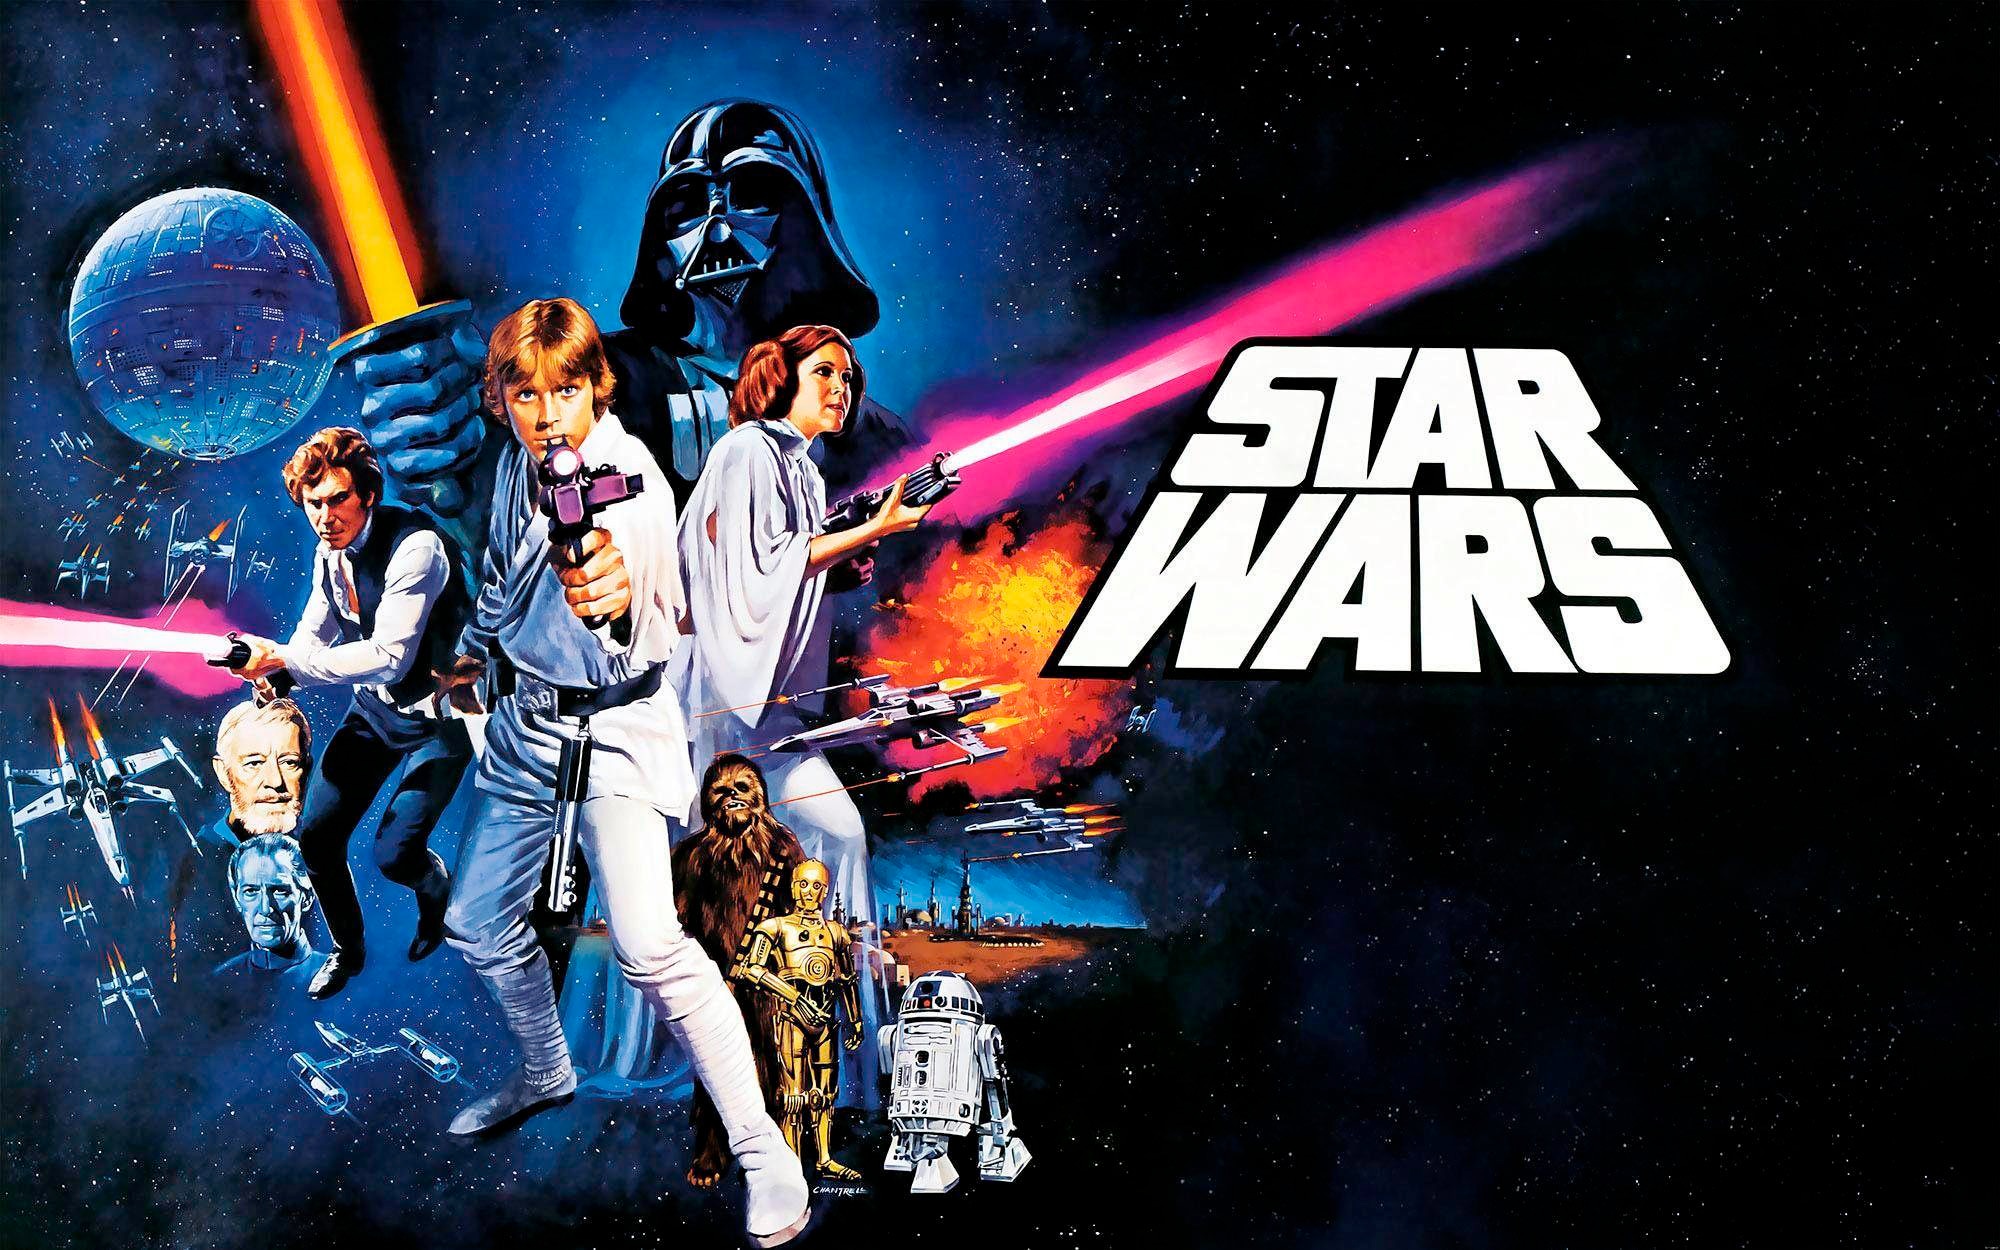 Komar Vliestapete »Star Wars Poster Classic ...